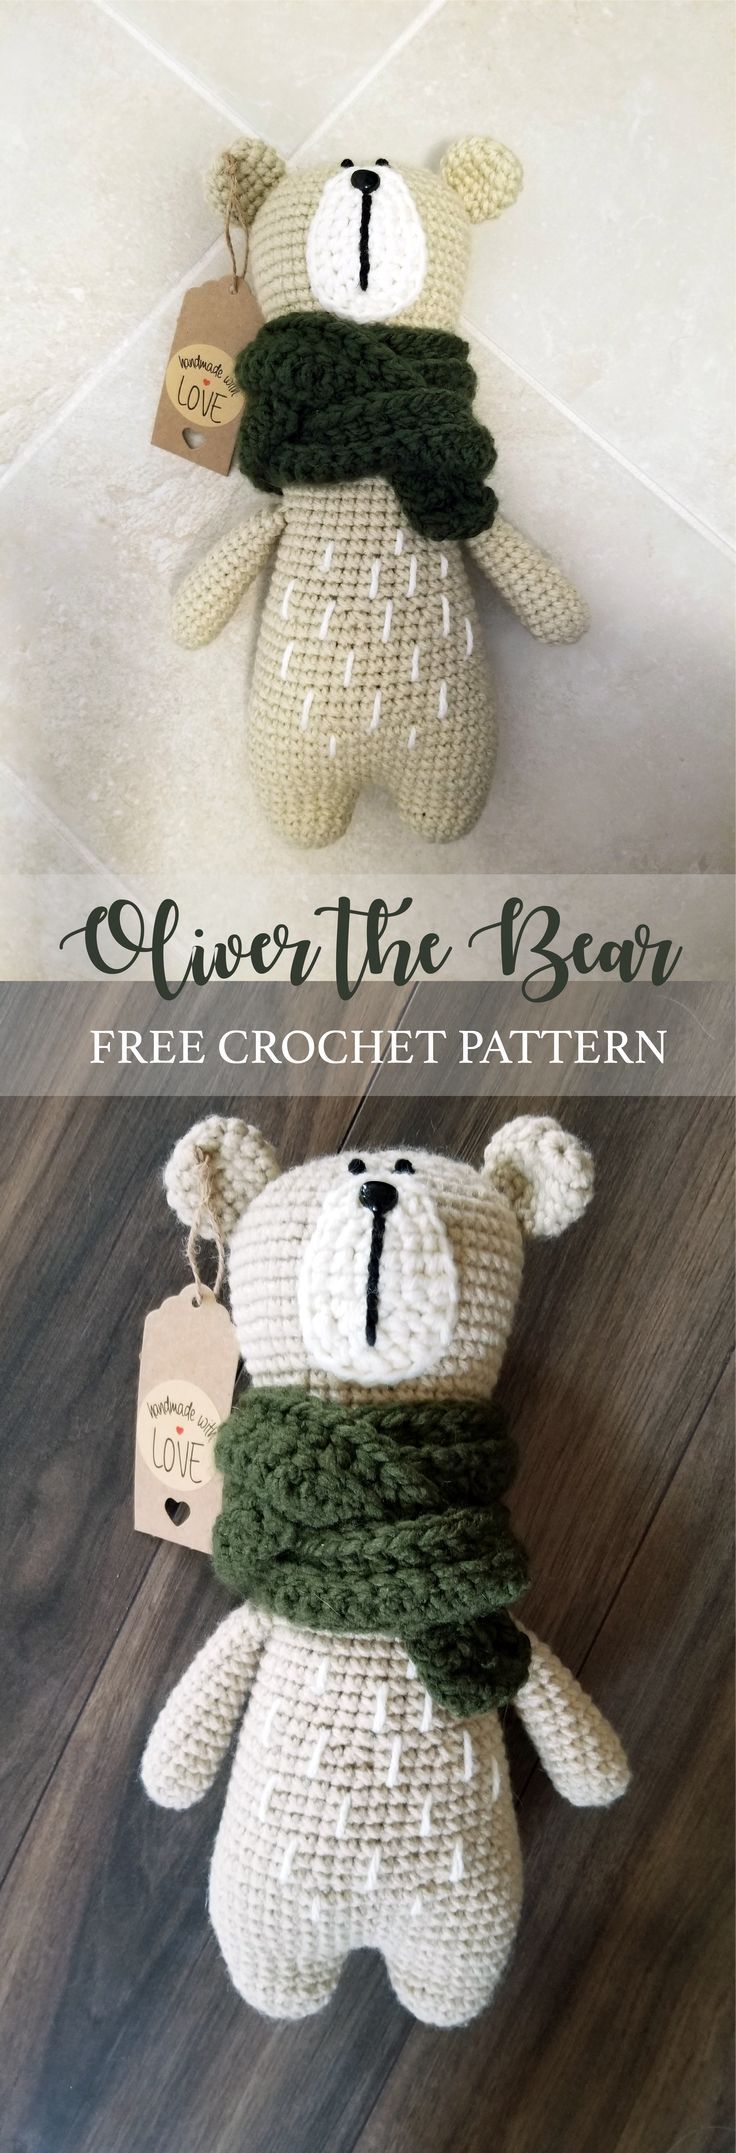 Oliver the Bear Free Amigurumi Crochet Pattern